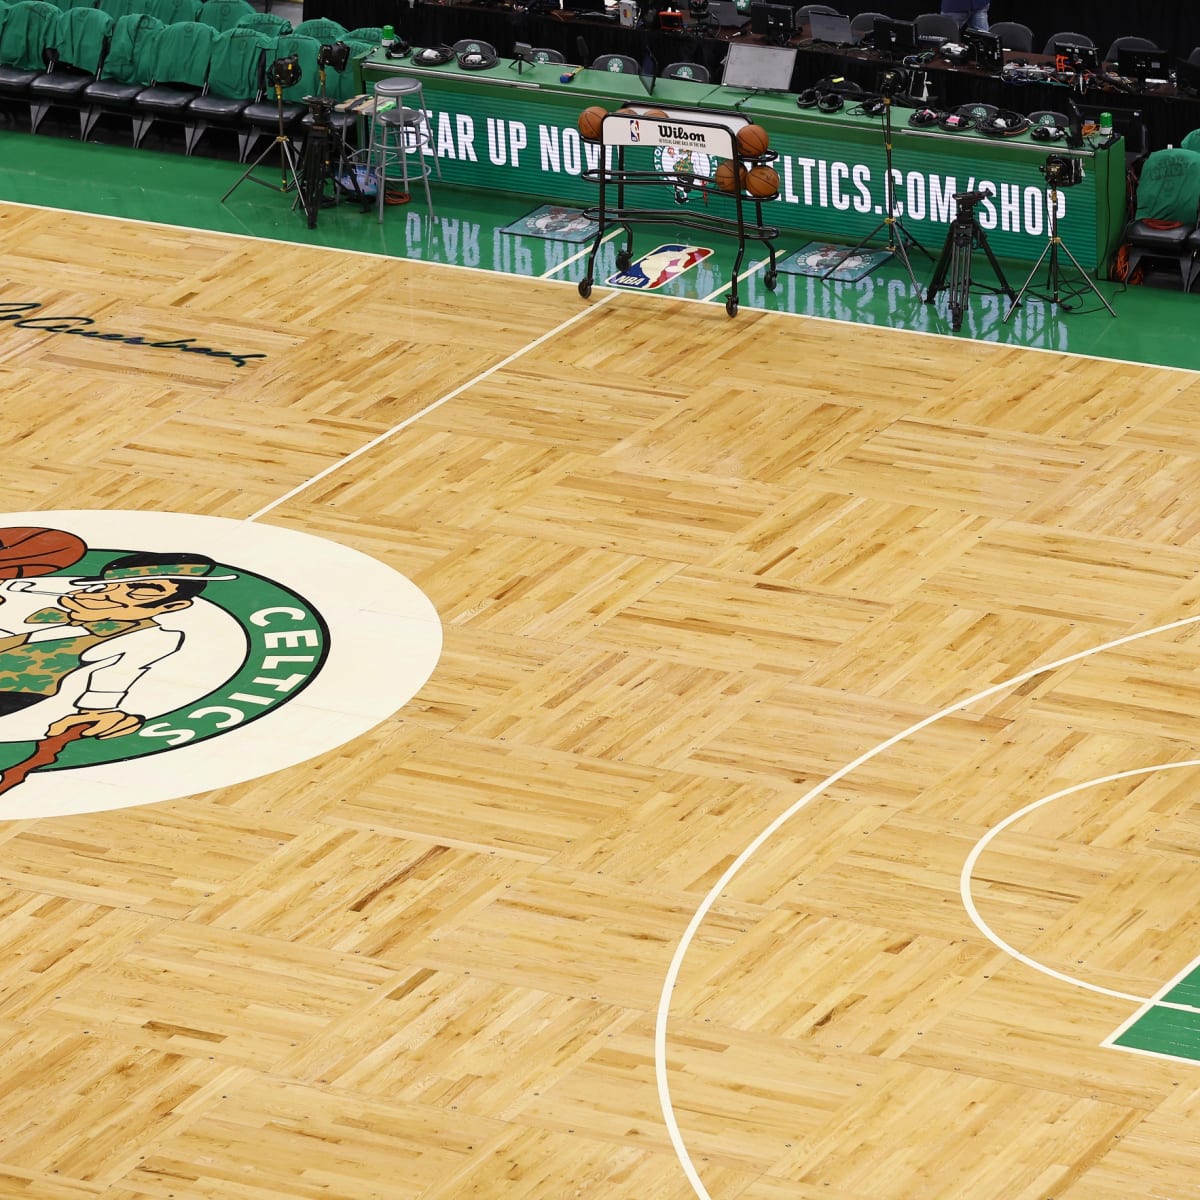 Boston Celtics face Robert Williams III dilemma ahead of Game 4